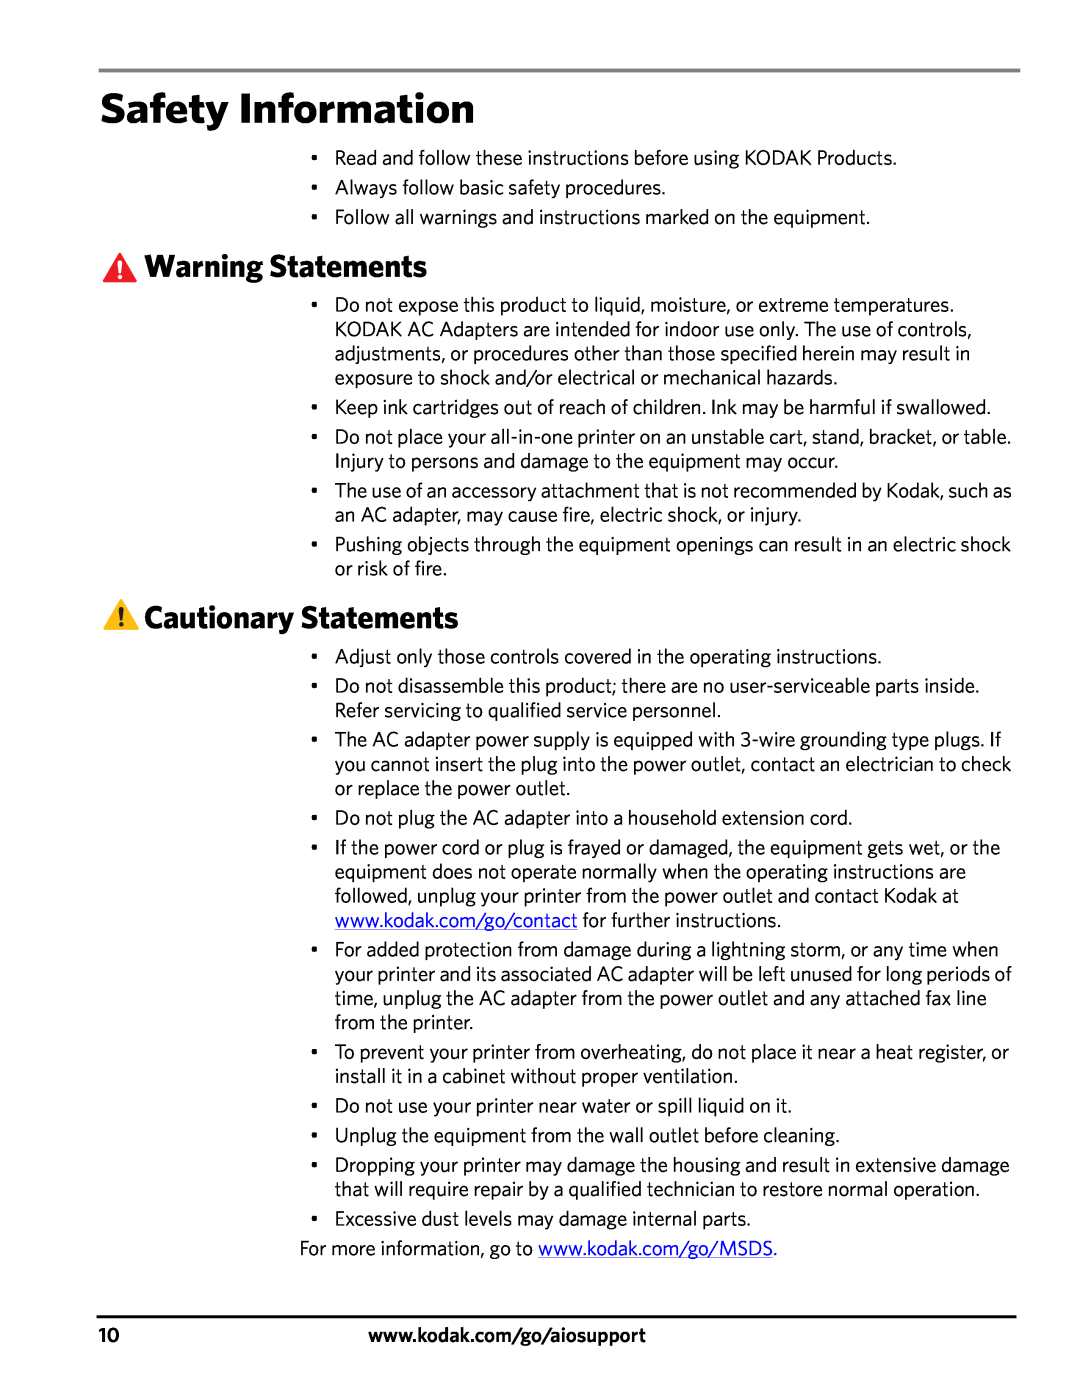 Kodak 3200 manual Safety Information, Warning Statements, Cautionary Statements 